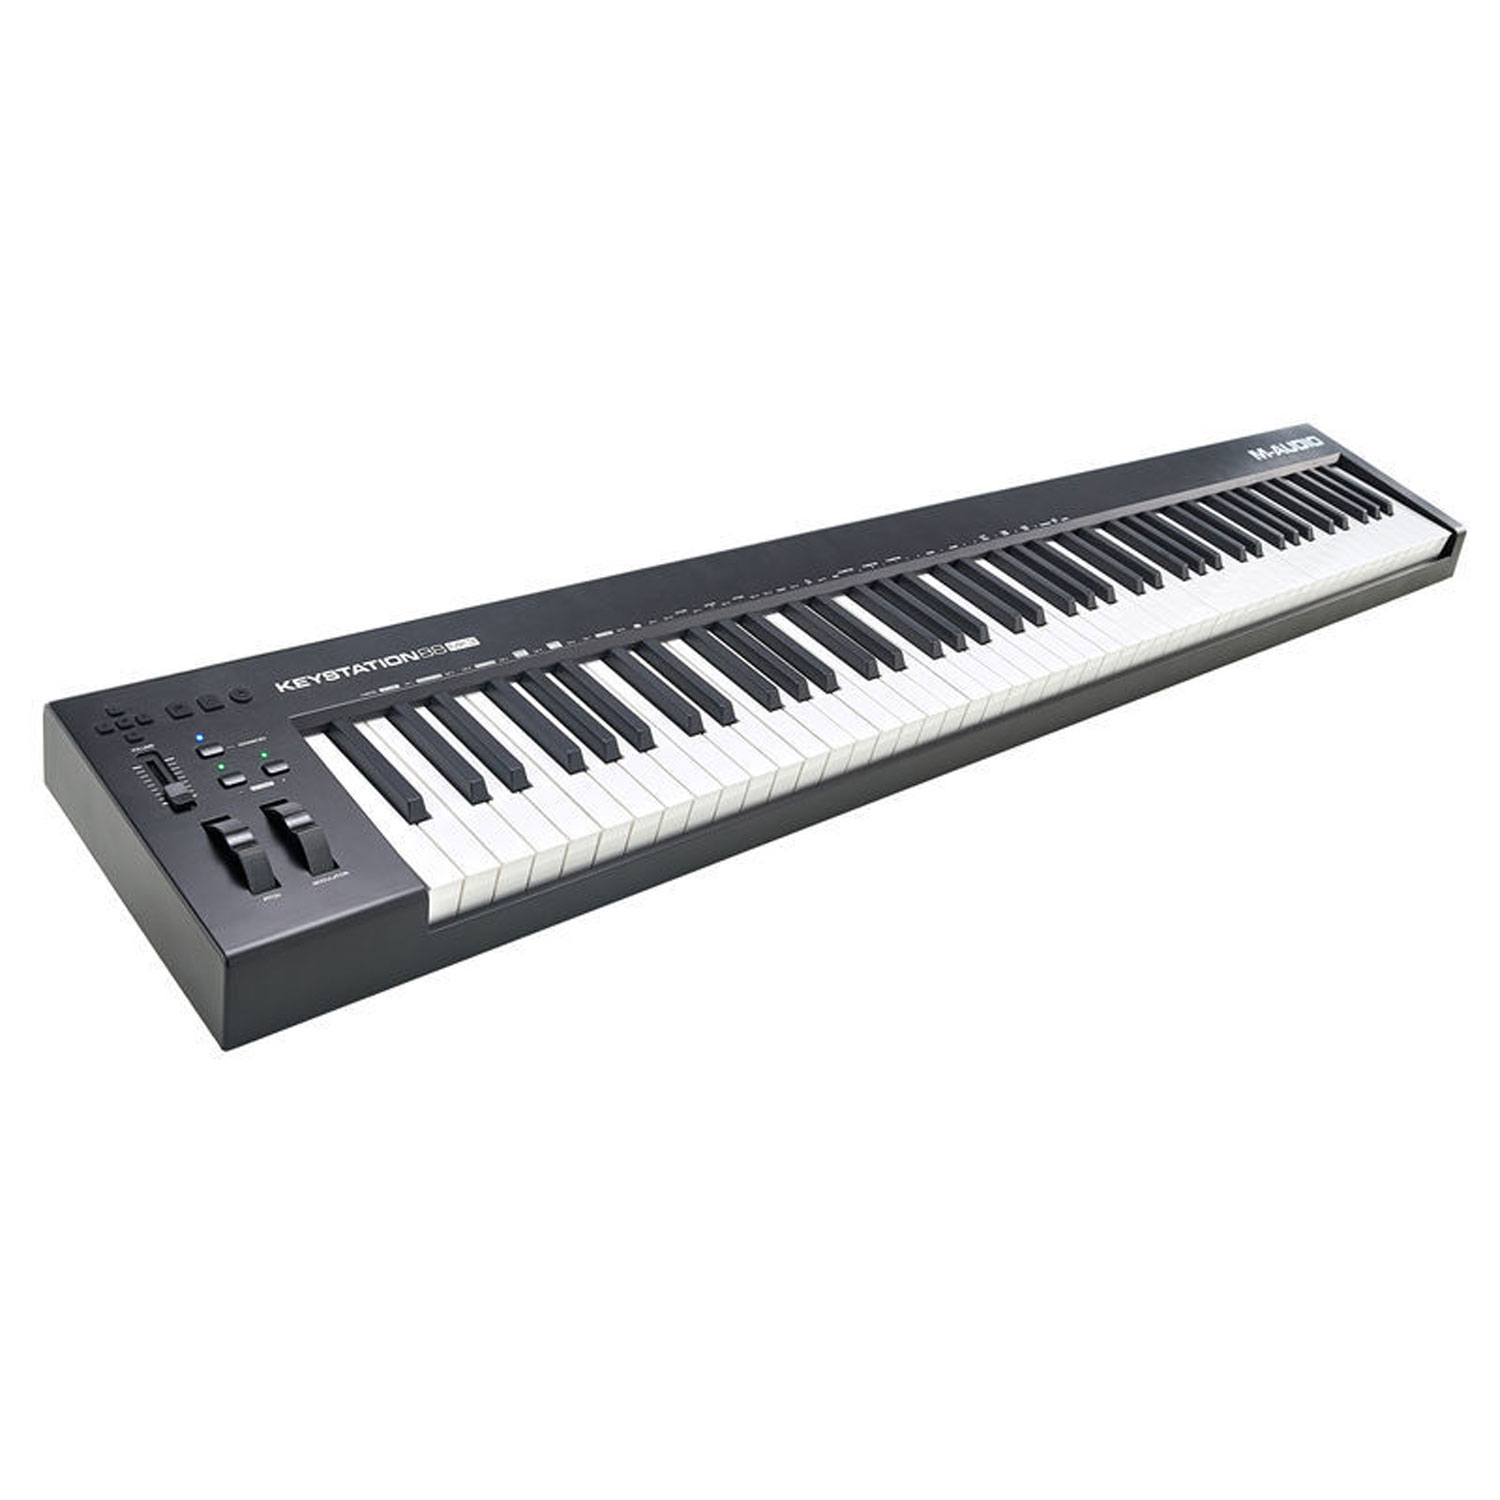 Gia-re-M-Audio-Keystation-88-Phim-MK3-MIDI-Keyboard-Controller-Tiki